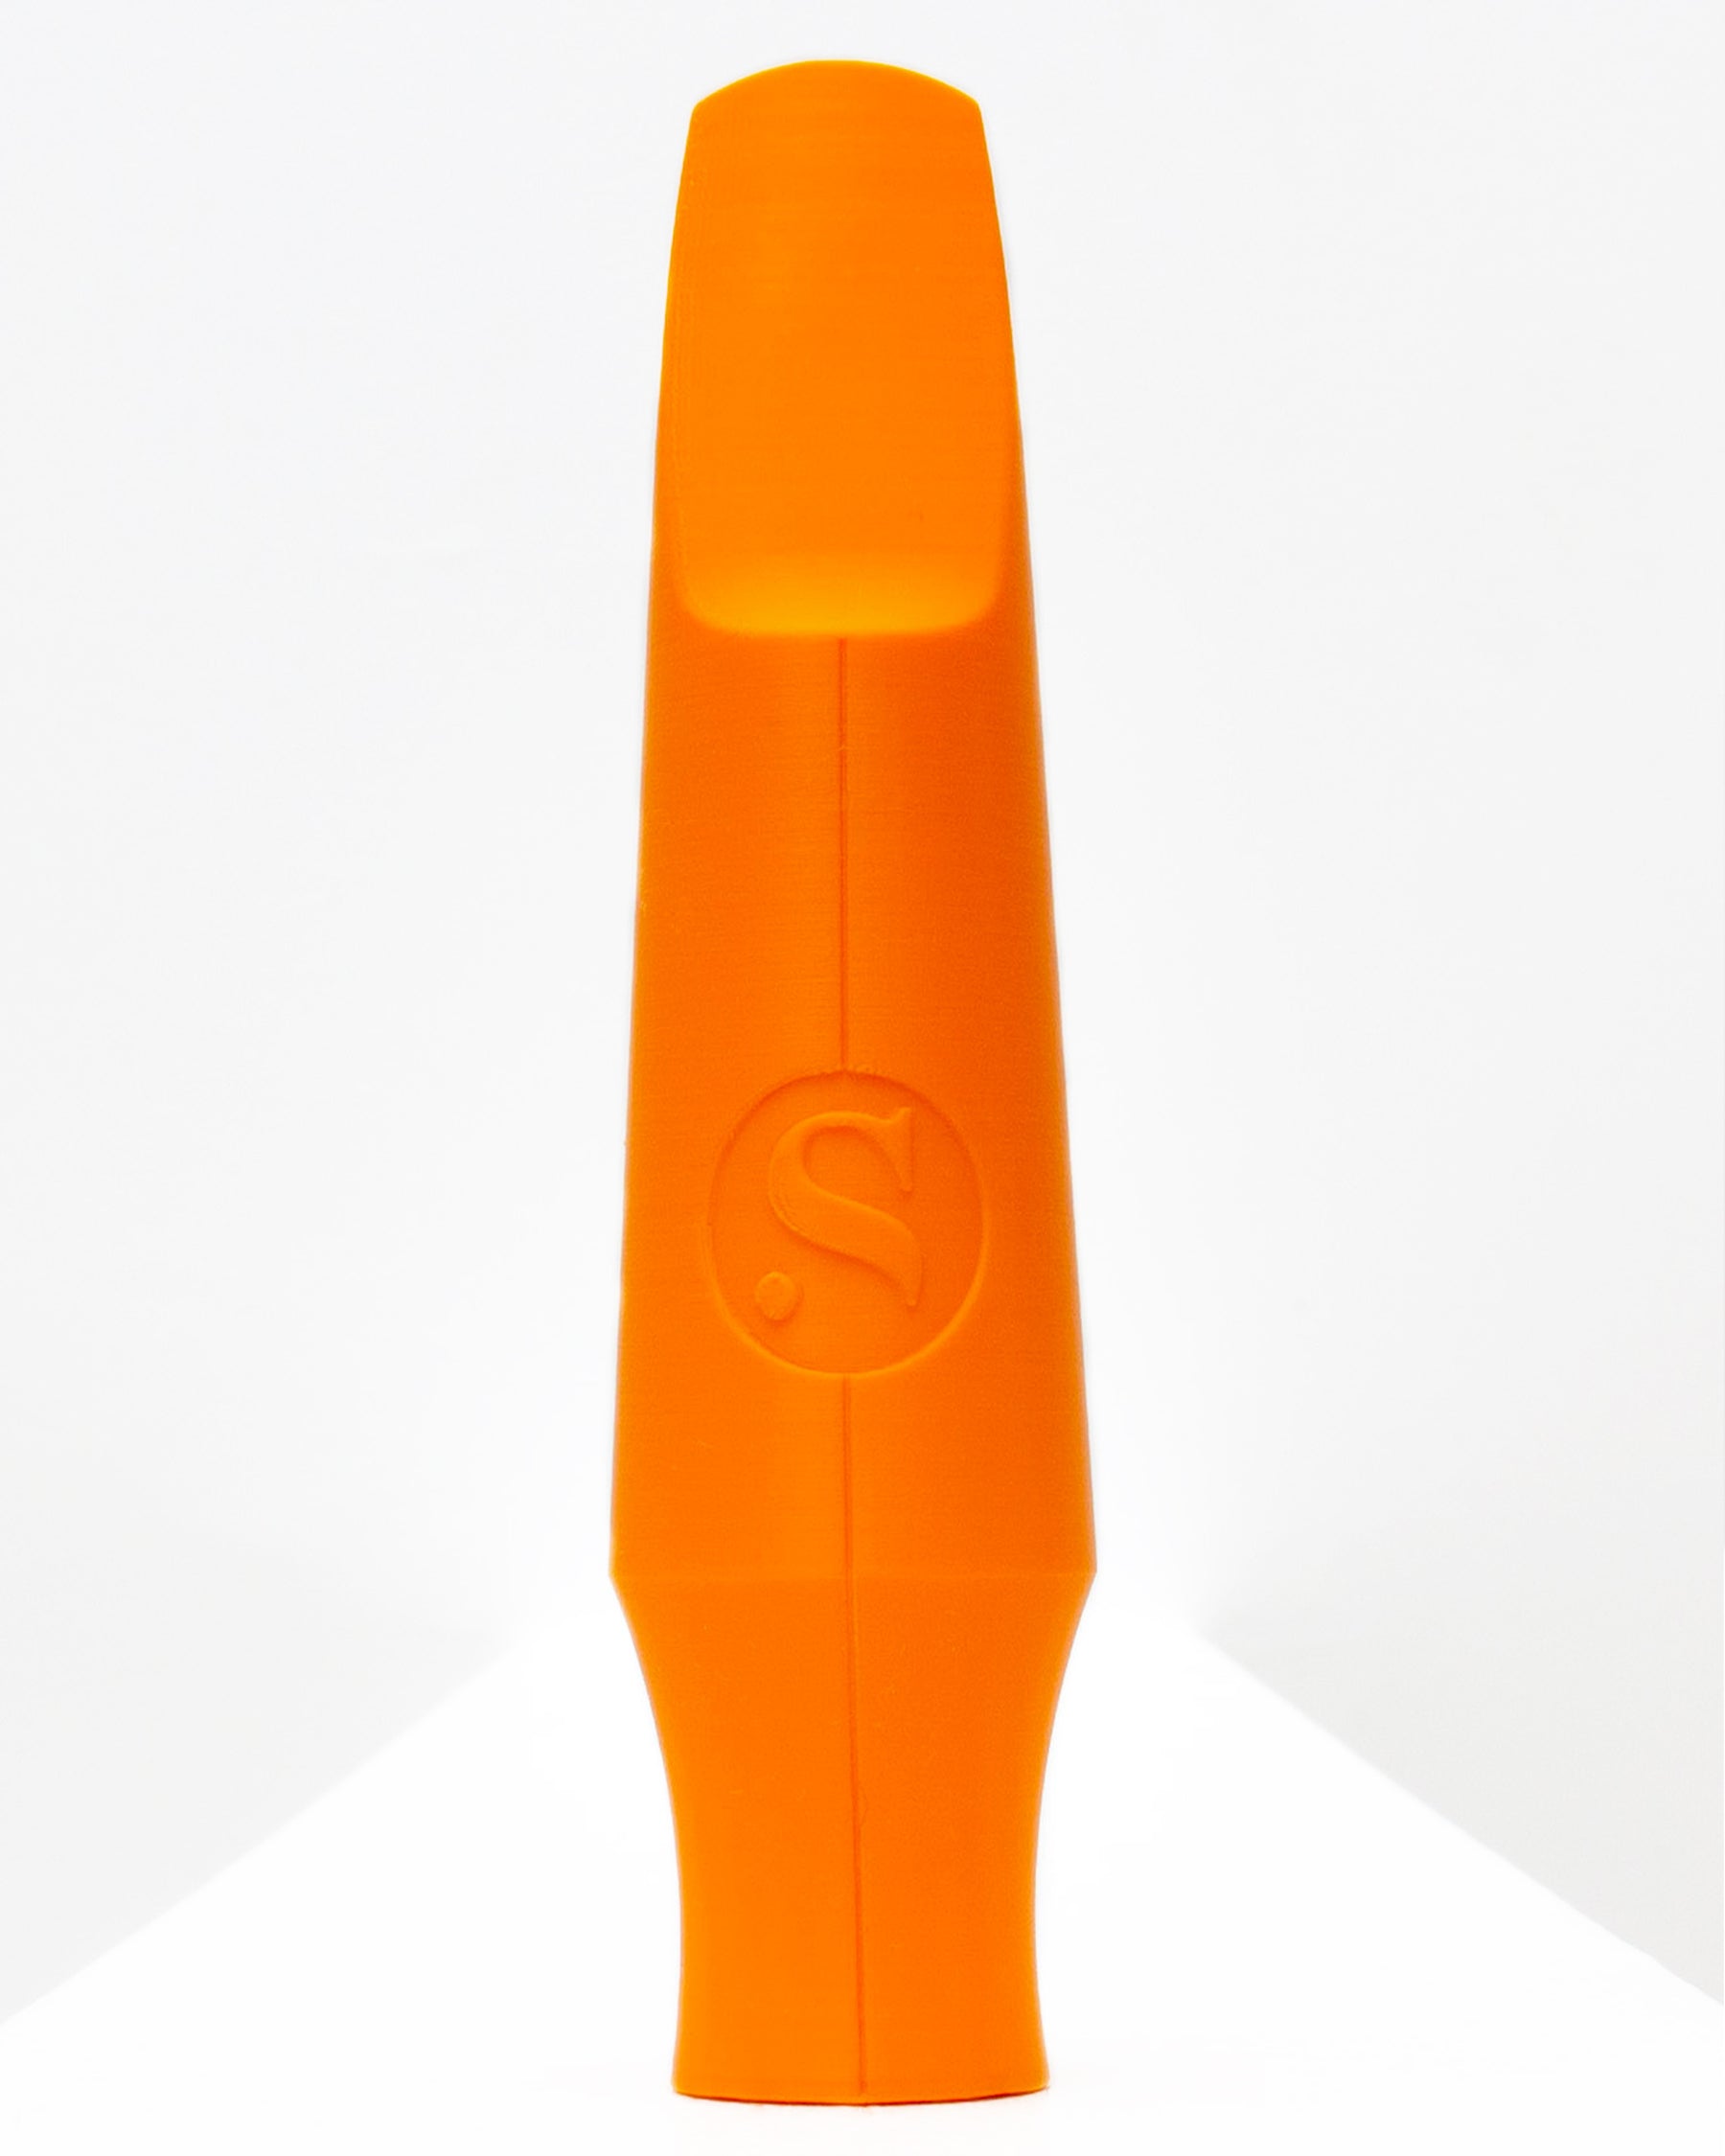 Baritone Originals Saxophone mouthpiece - Spark by Syos - 8 / Lava Orange